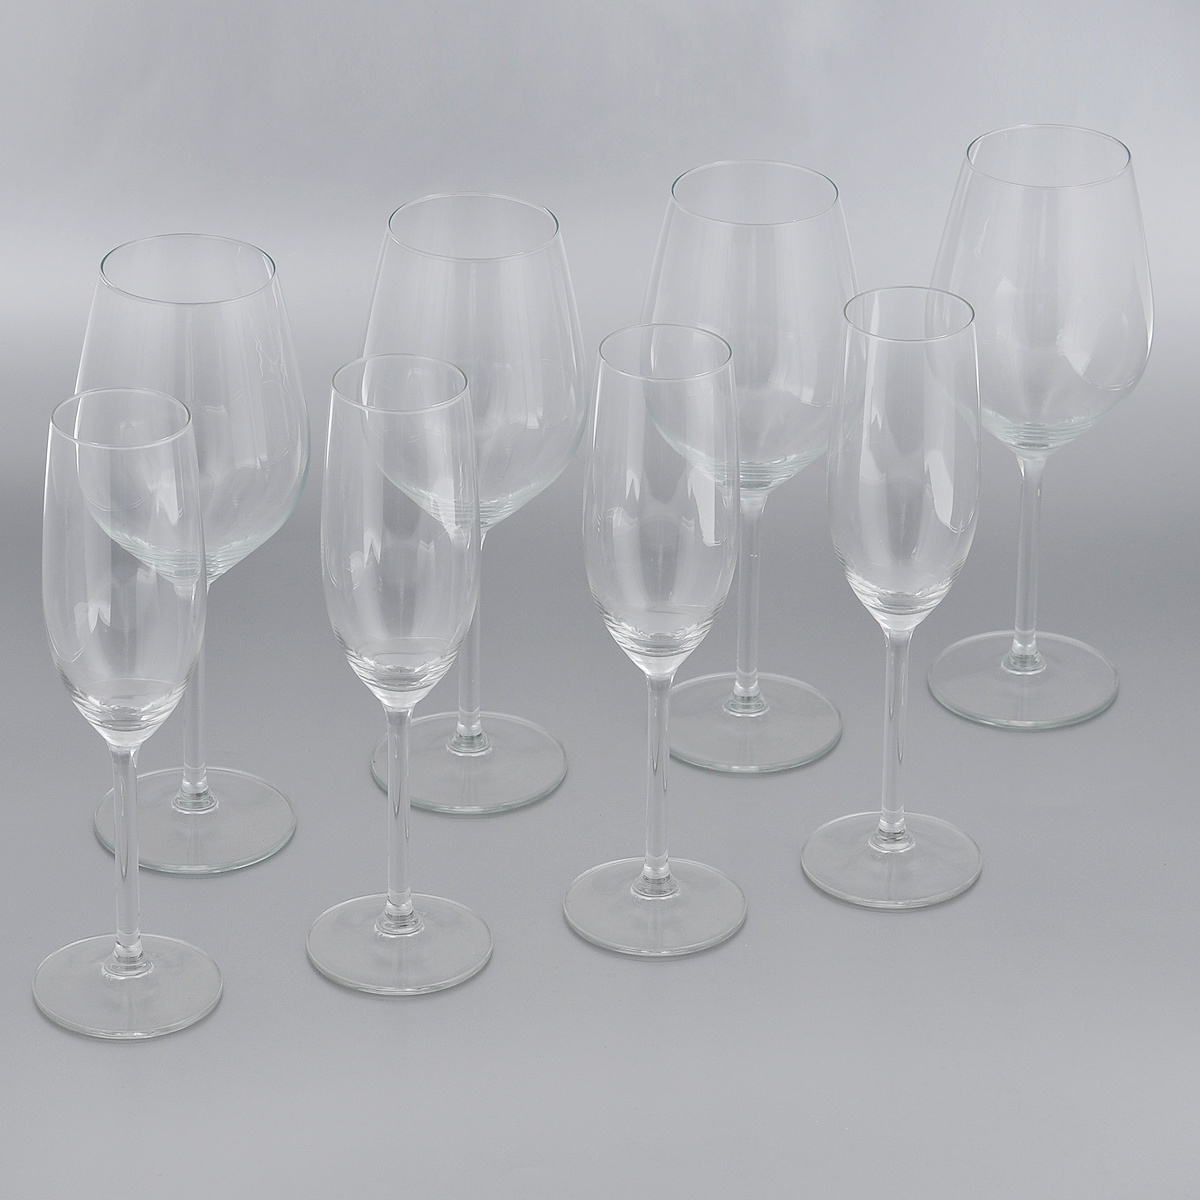  бокалов для шампанского, для белого вина Royal Leerdam, 8 шт .